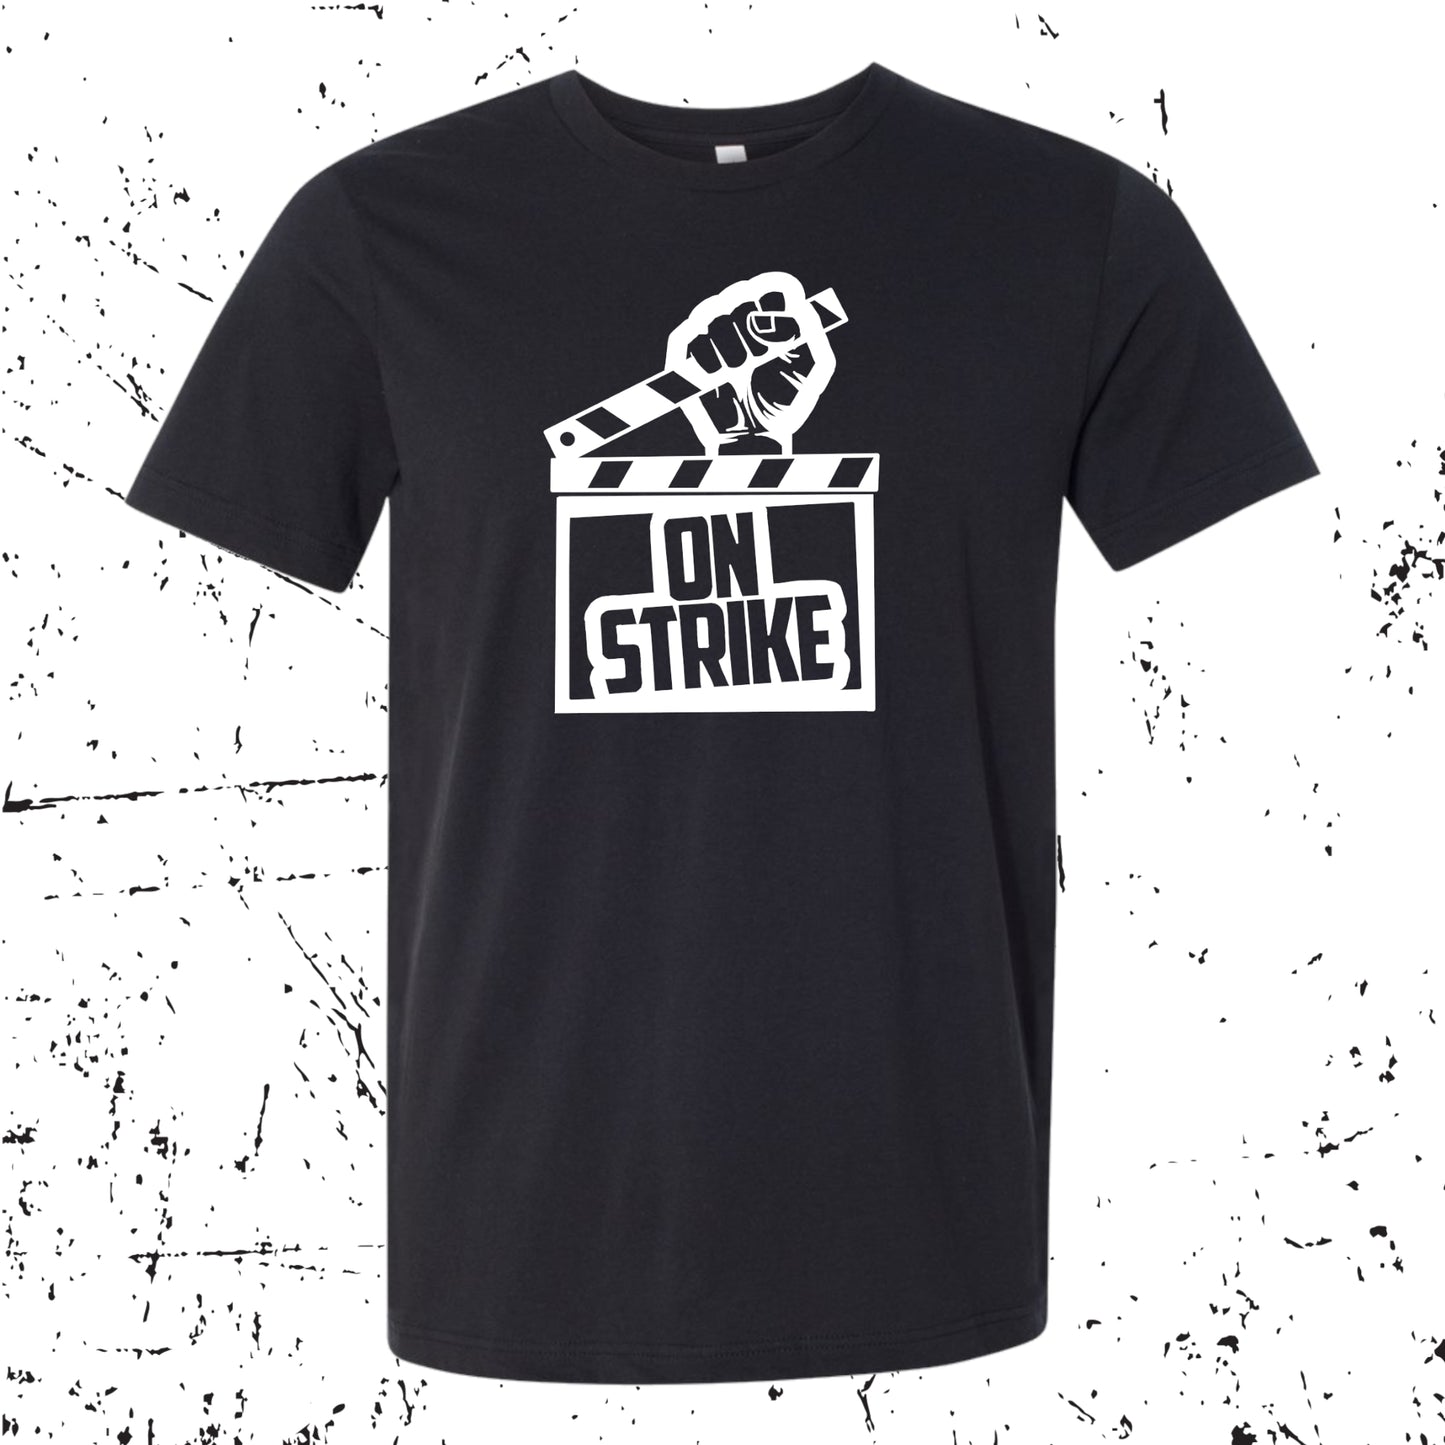 Actor Union Strike Shirt